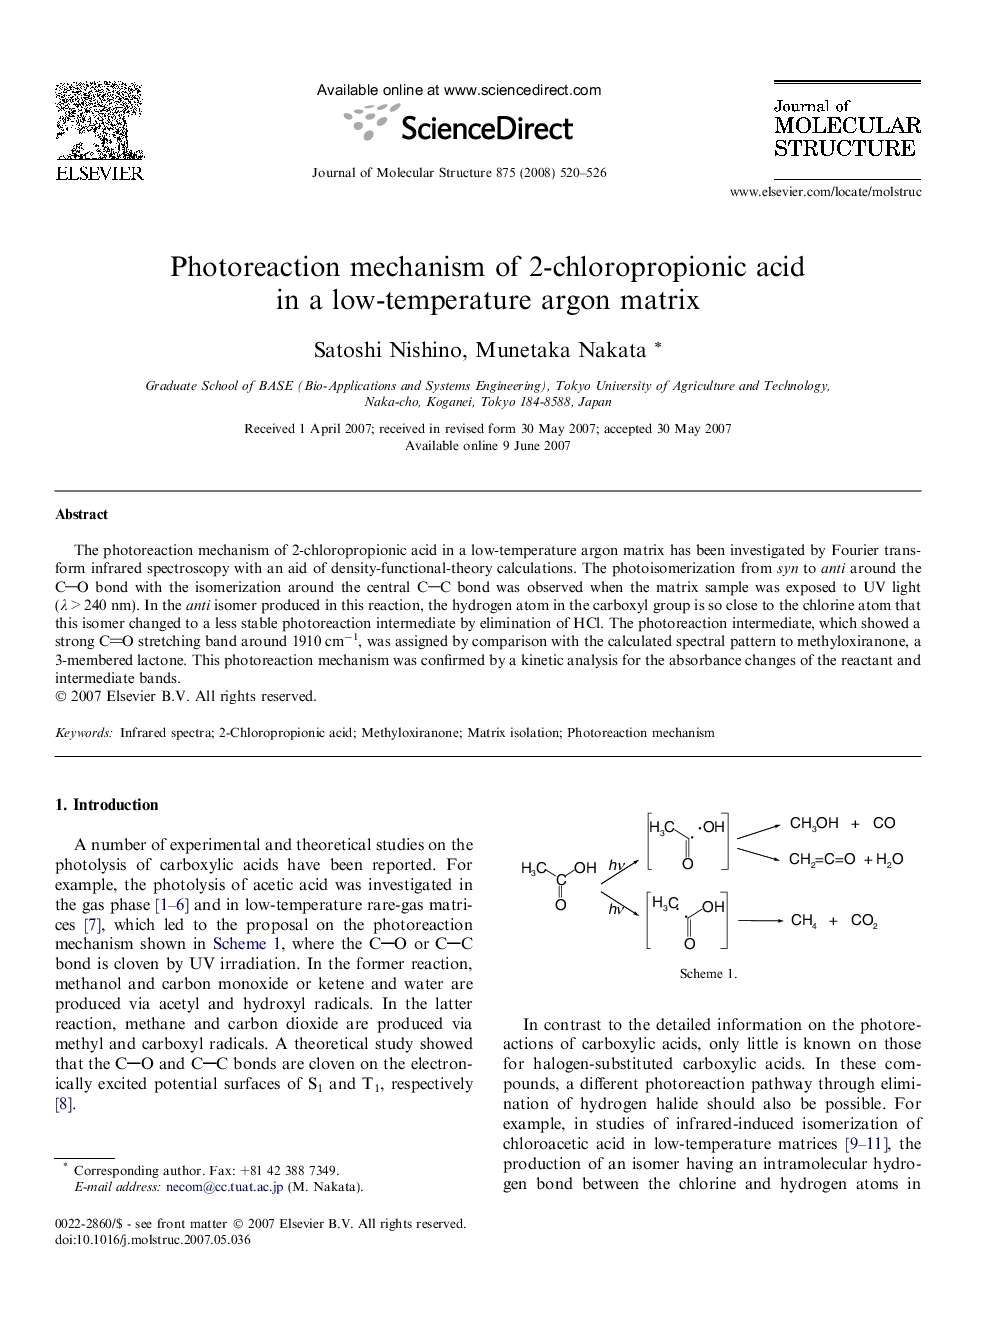 Photoreaction mechanism of 2-chloropropionic acid in a low-temperature argon matrix